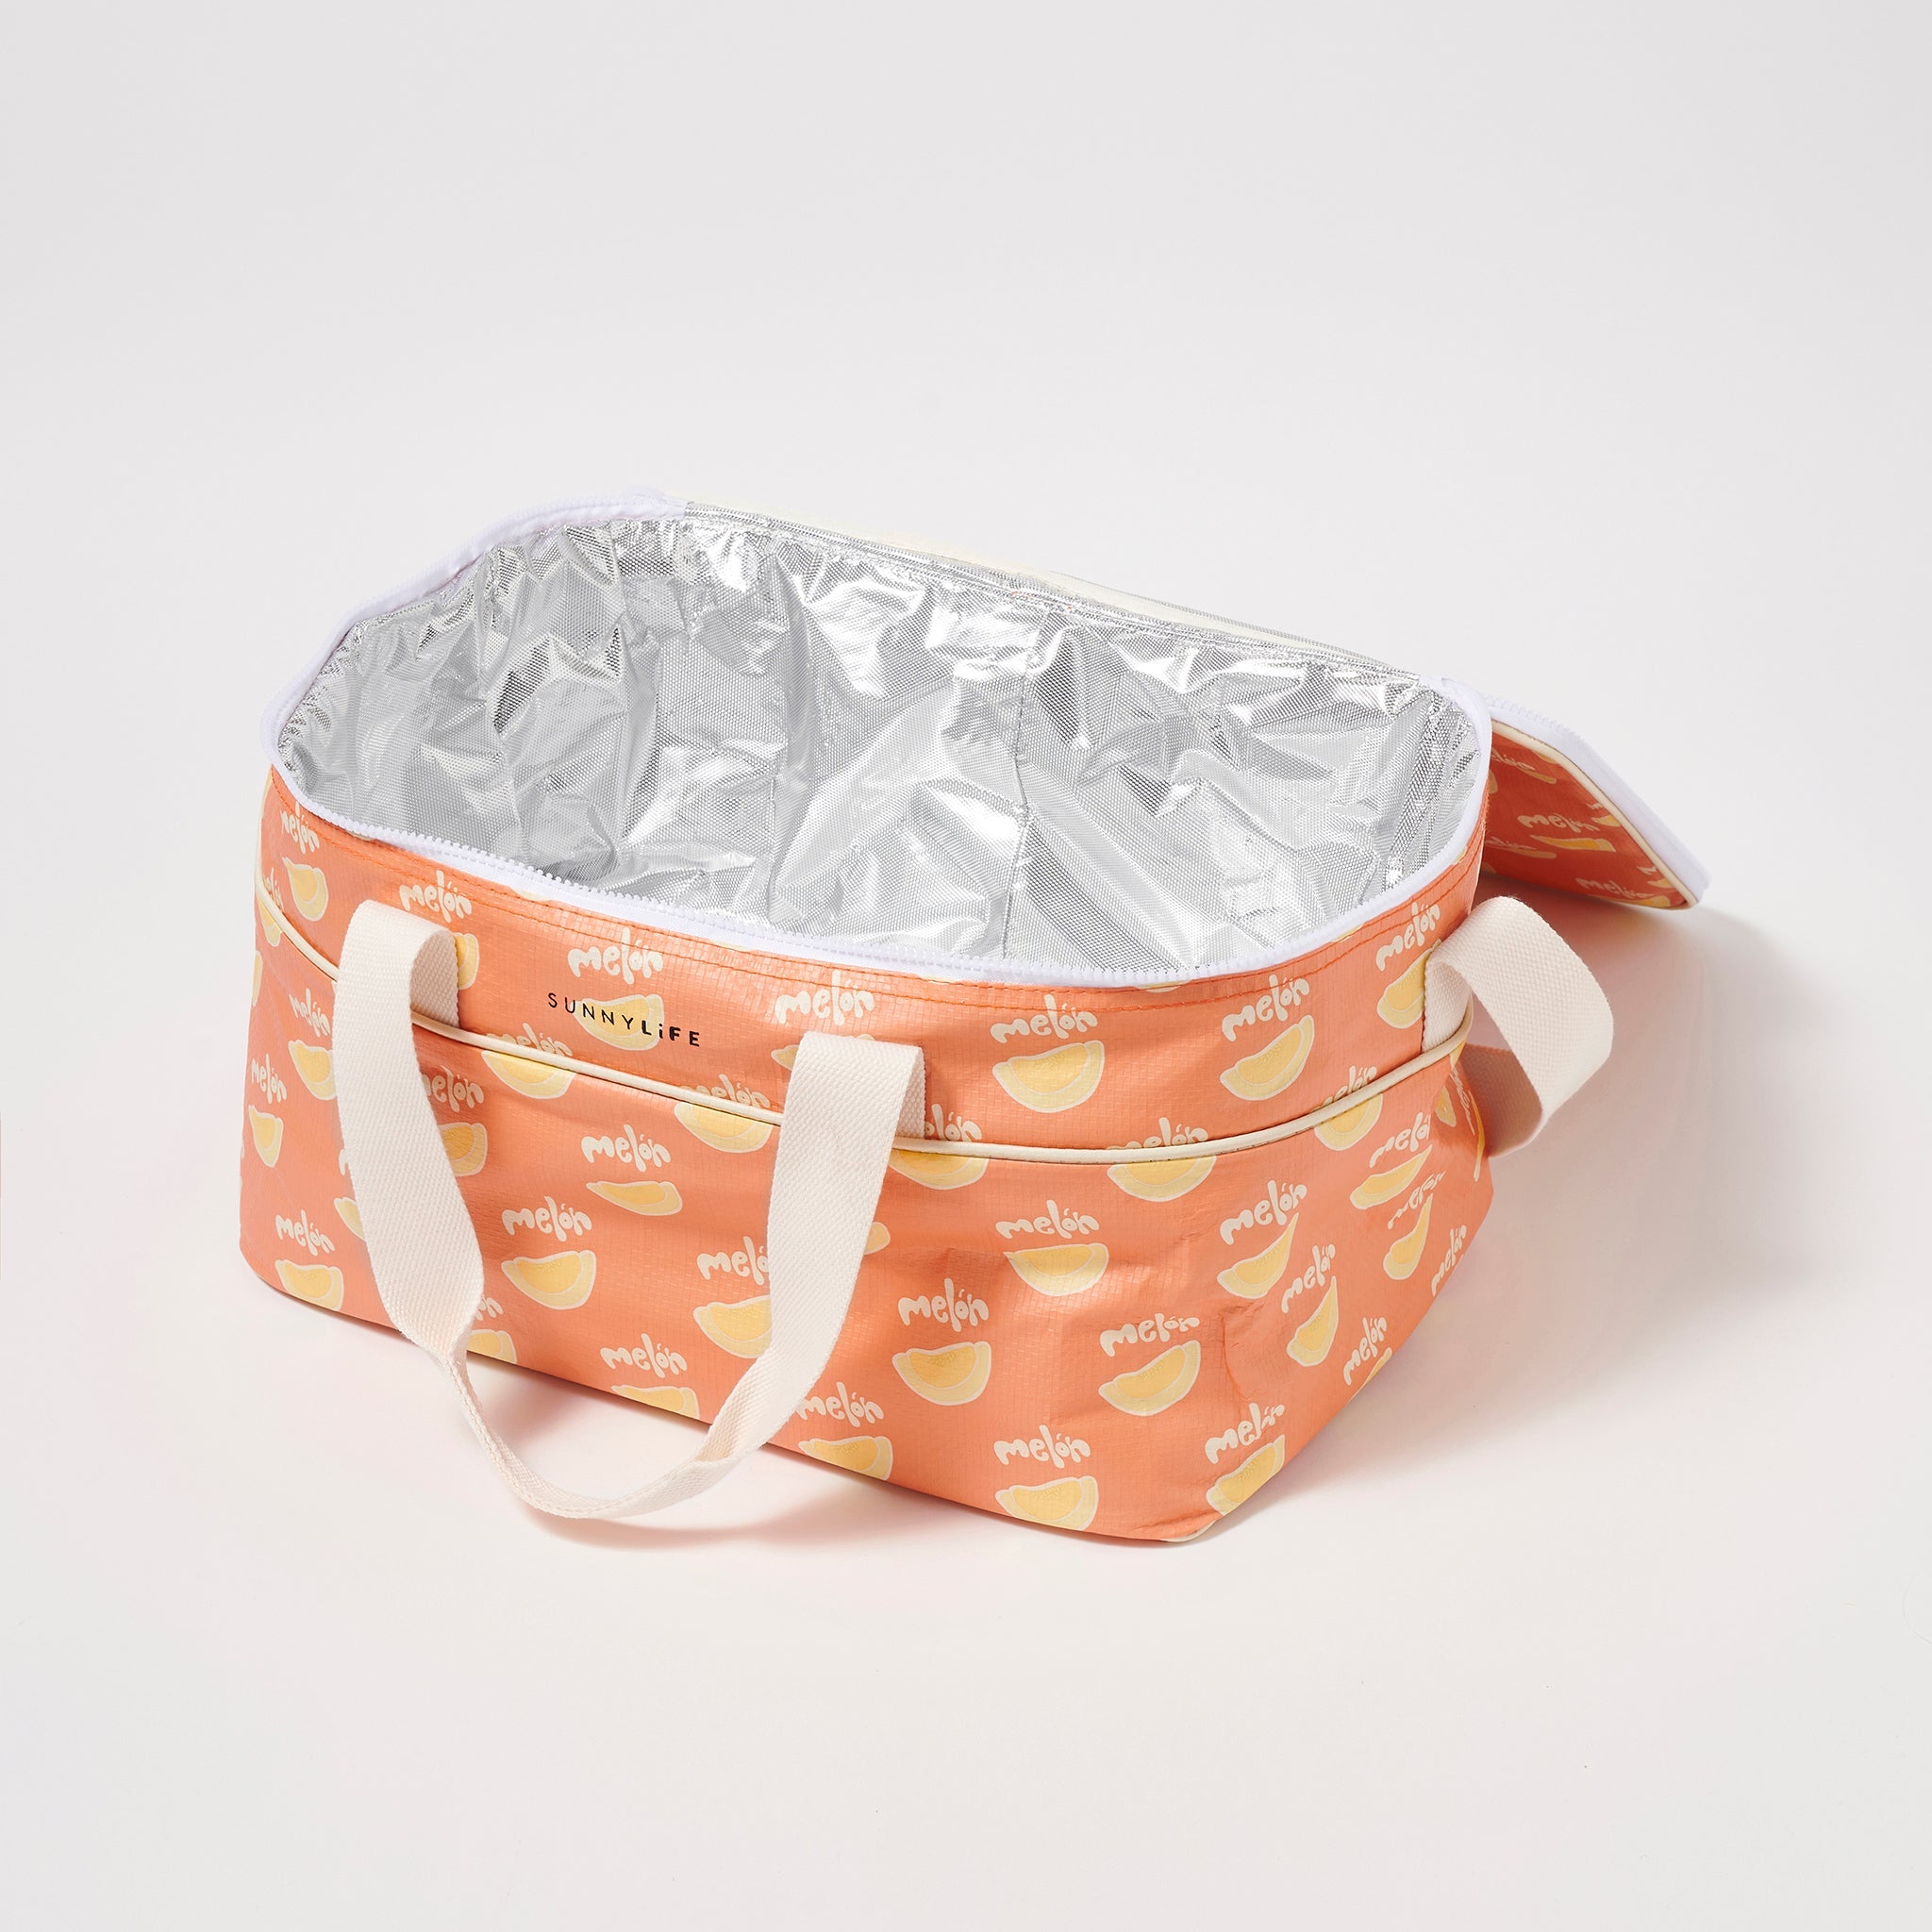 SUNNYLiFE |Light Cooler Bag | Utopia Melon